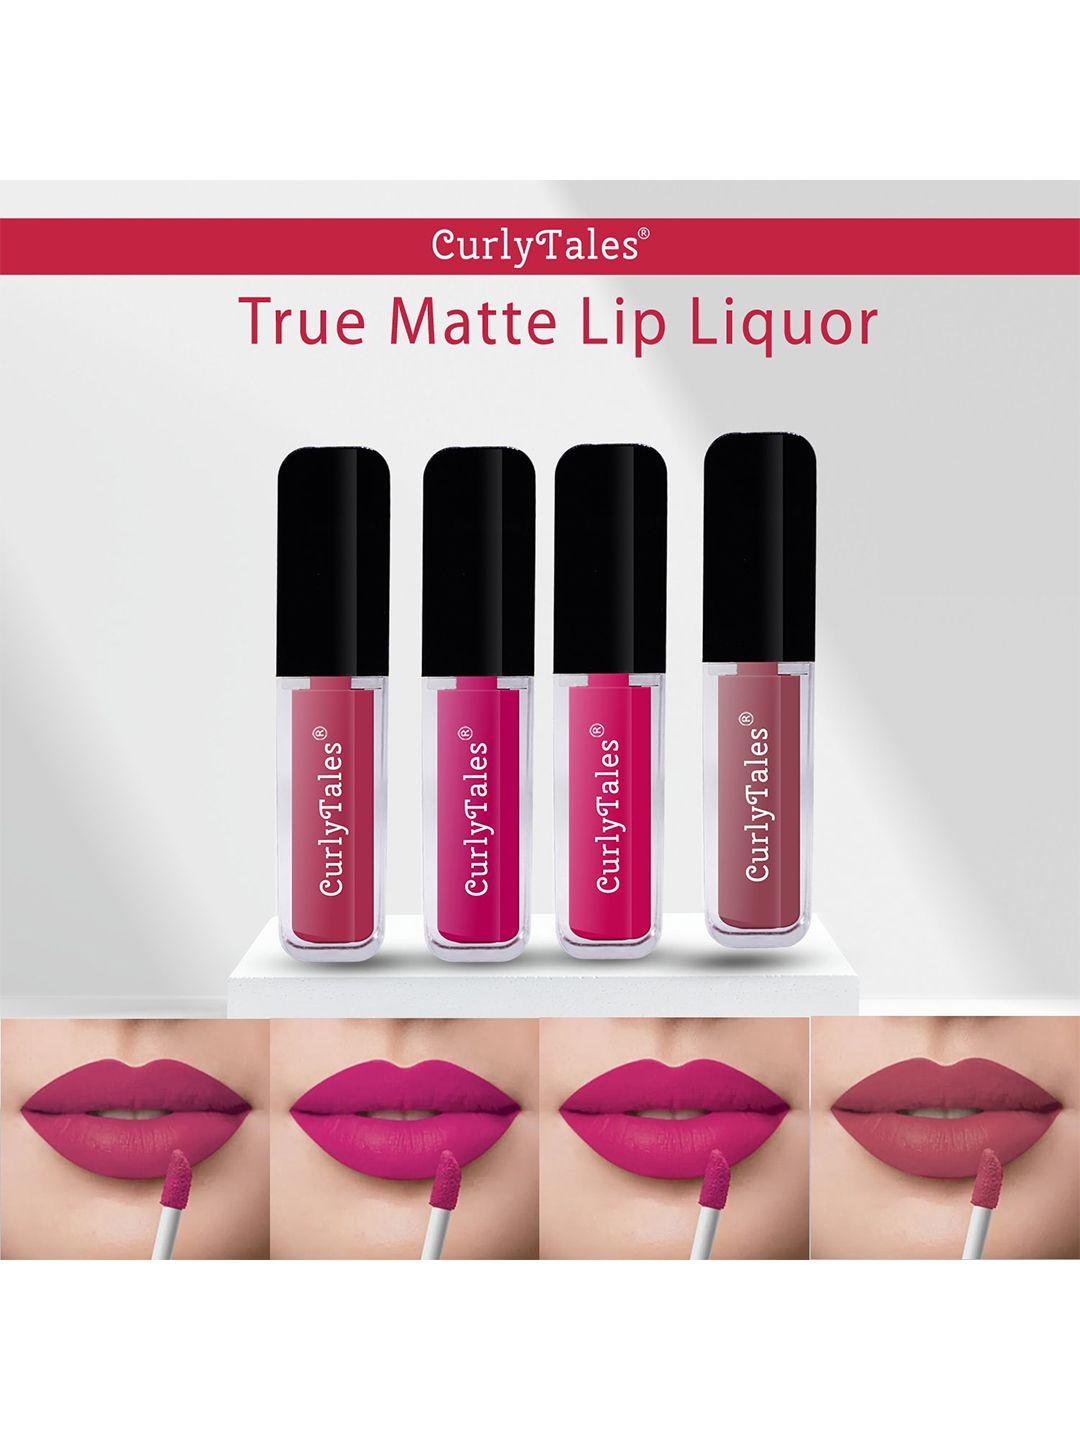 curlytales set of 4 light on lips silky matte long lasting liquid lipsticks 12ml each